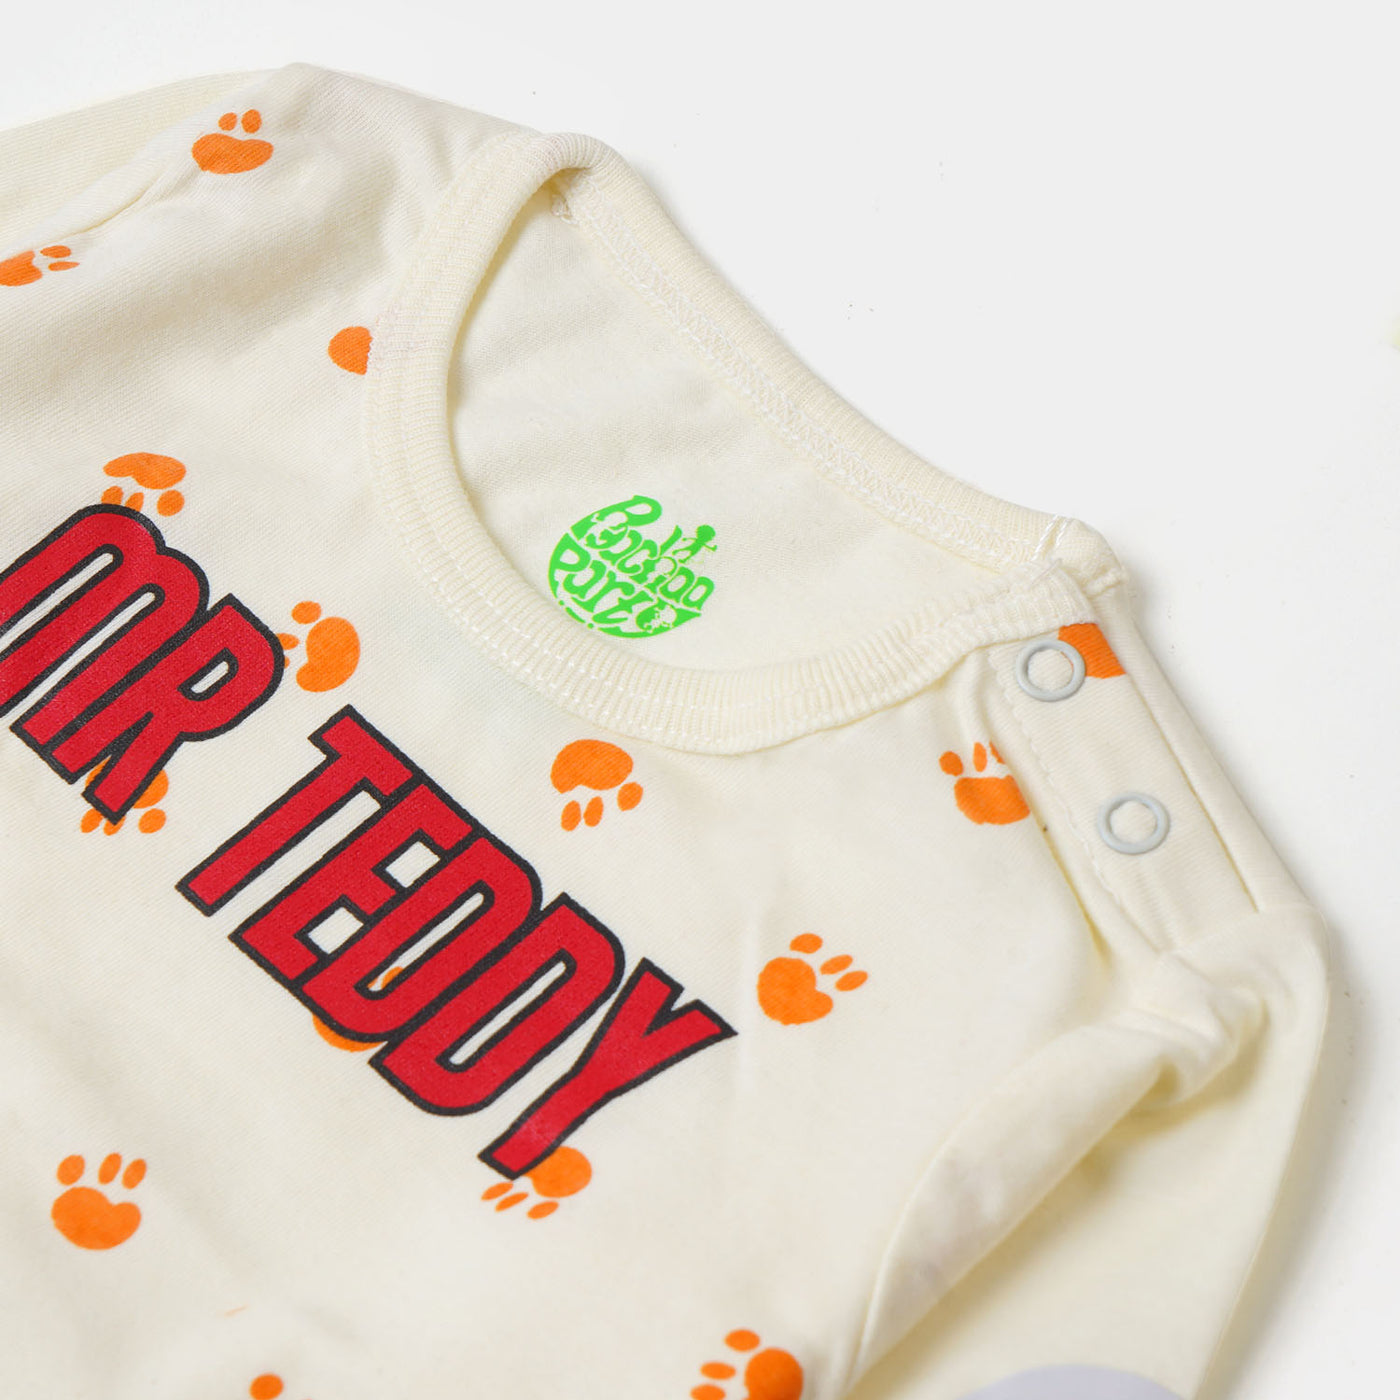 Infant Boys Knitted Suit Mr Bear - Off White/Orange